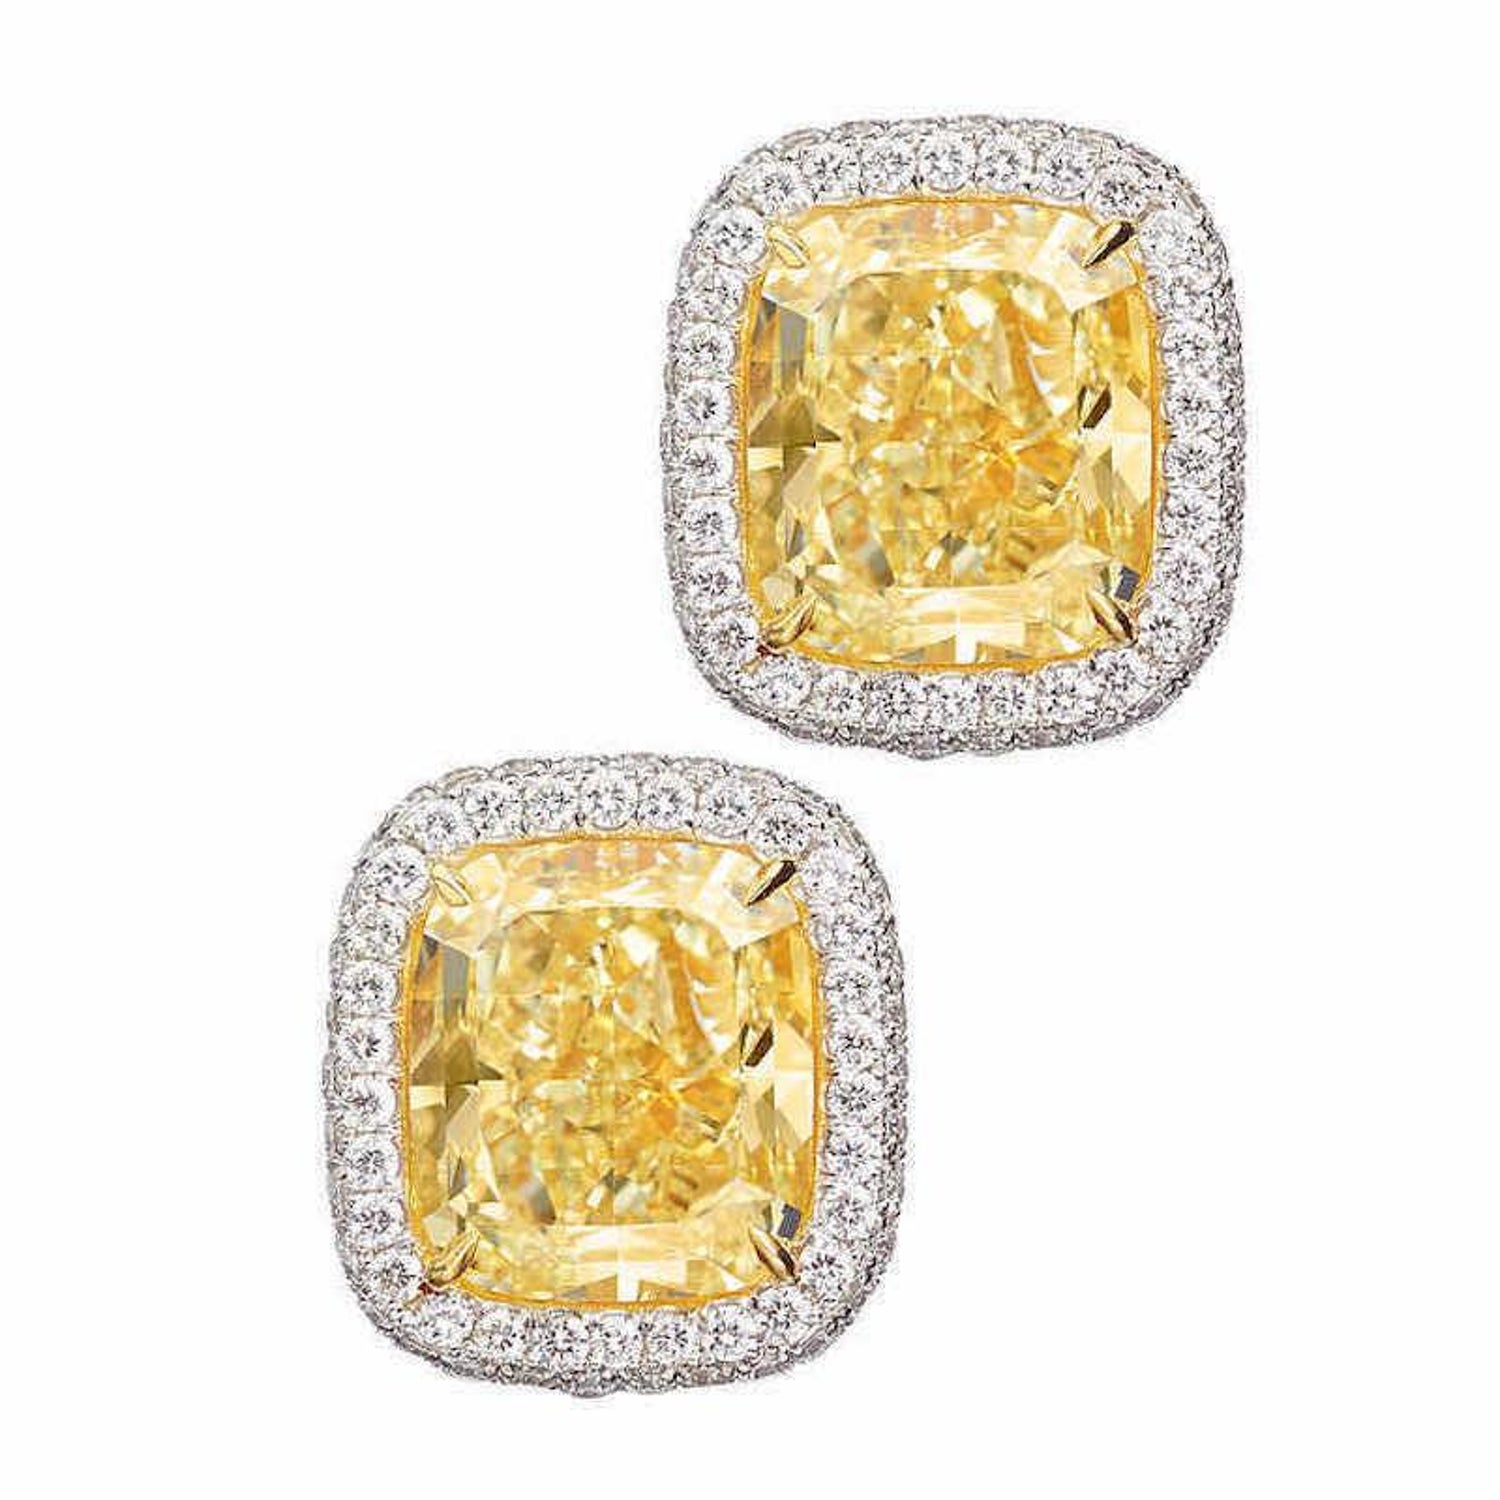 11 5 Carat Fancy Yellow Diamond Stud Earrings With Platinum